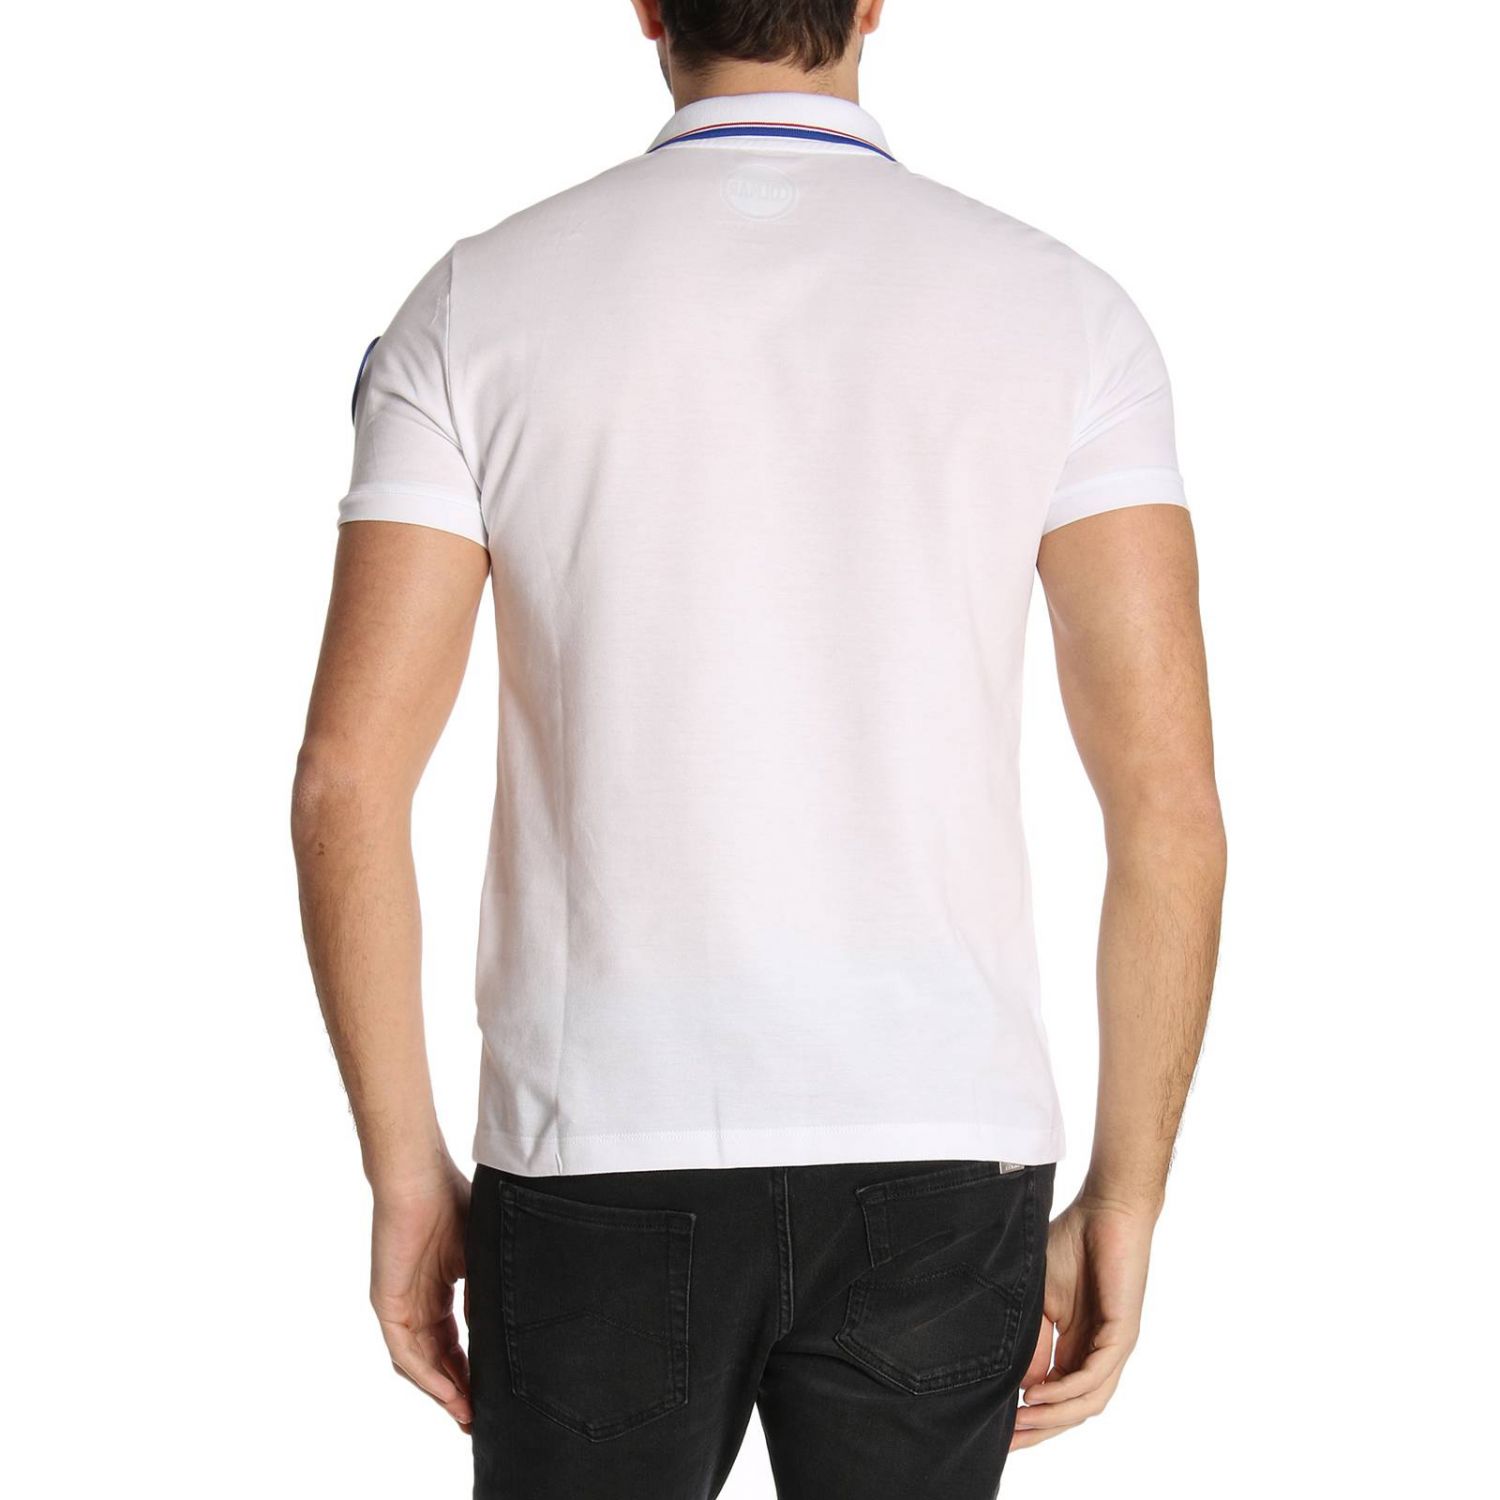 Colmar Outlet: T-shirt men | T-Shirt Colmar Men White | T-Shirt Colmar ...